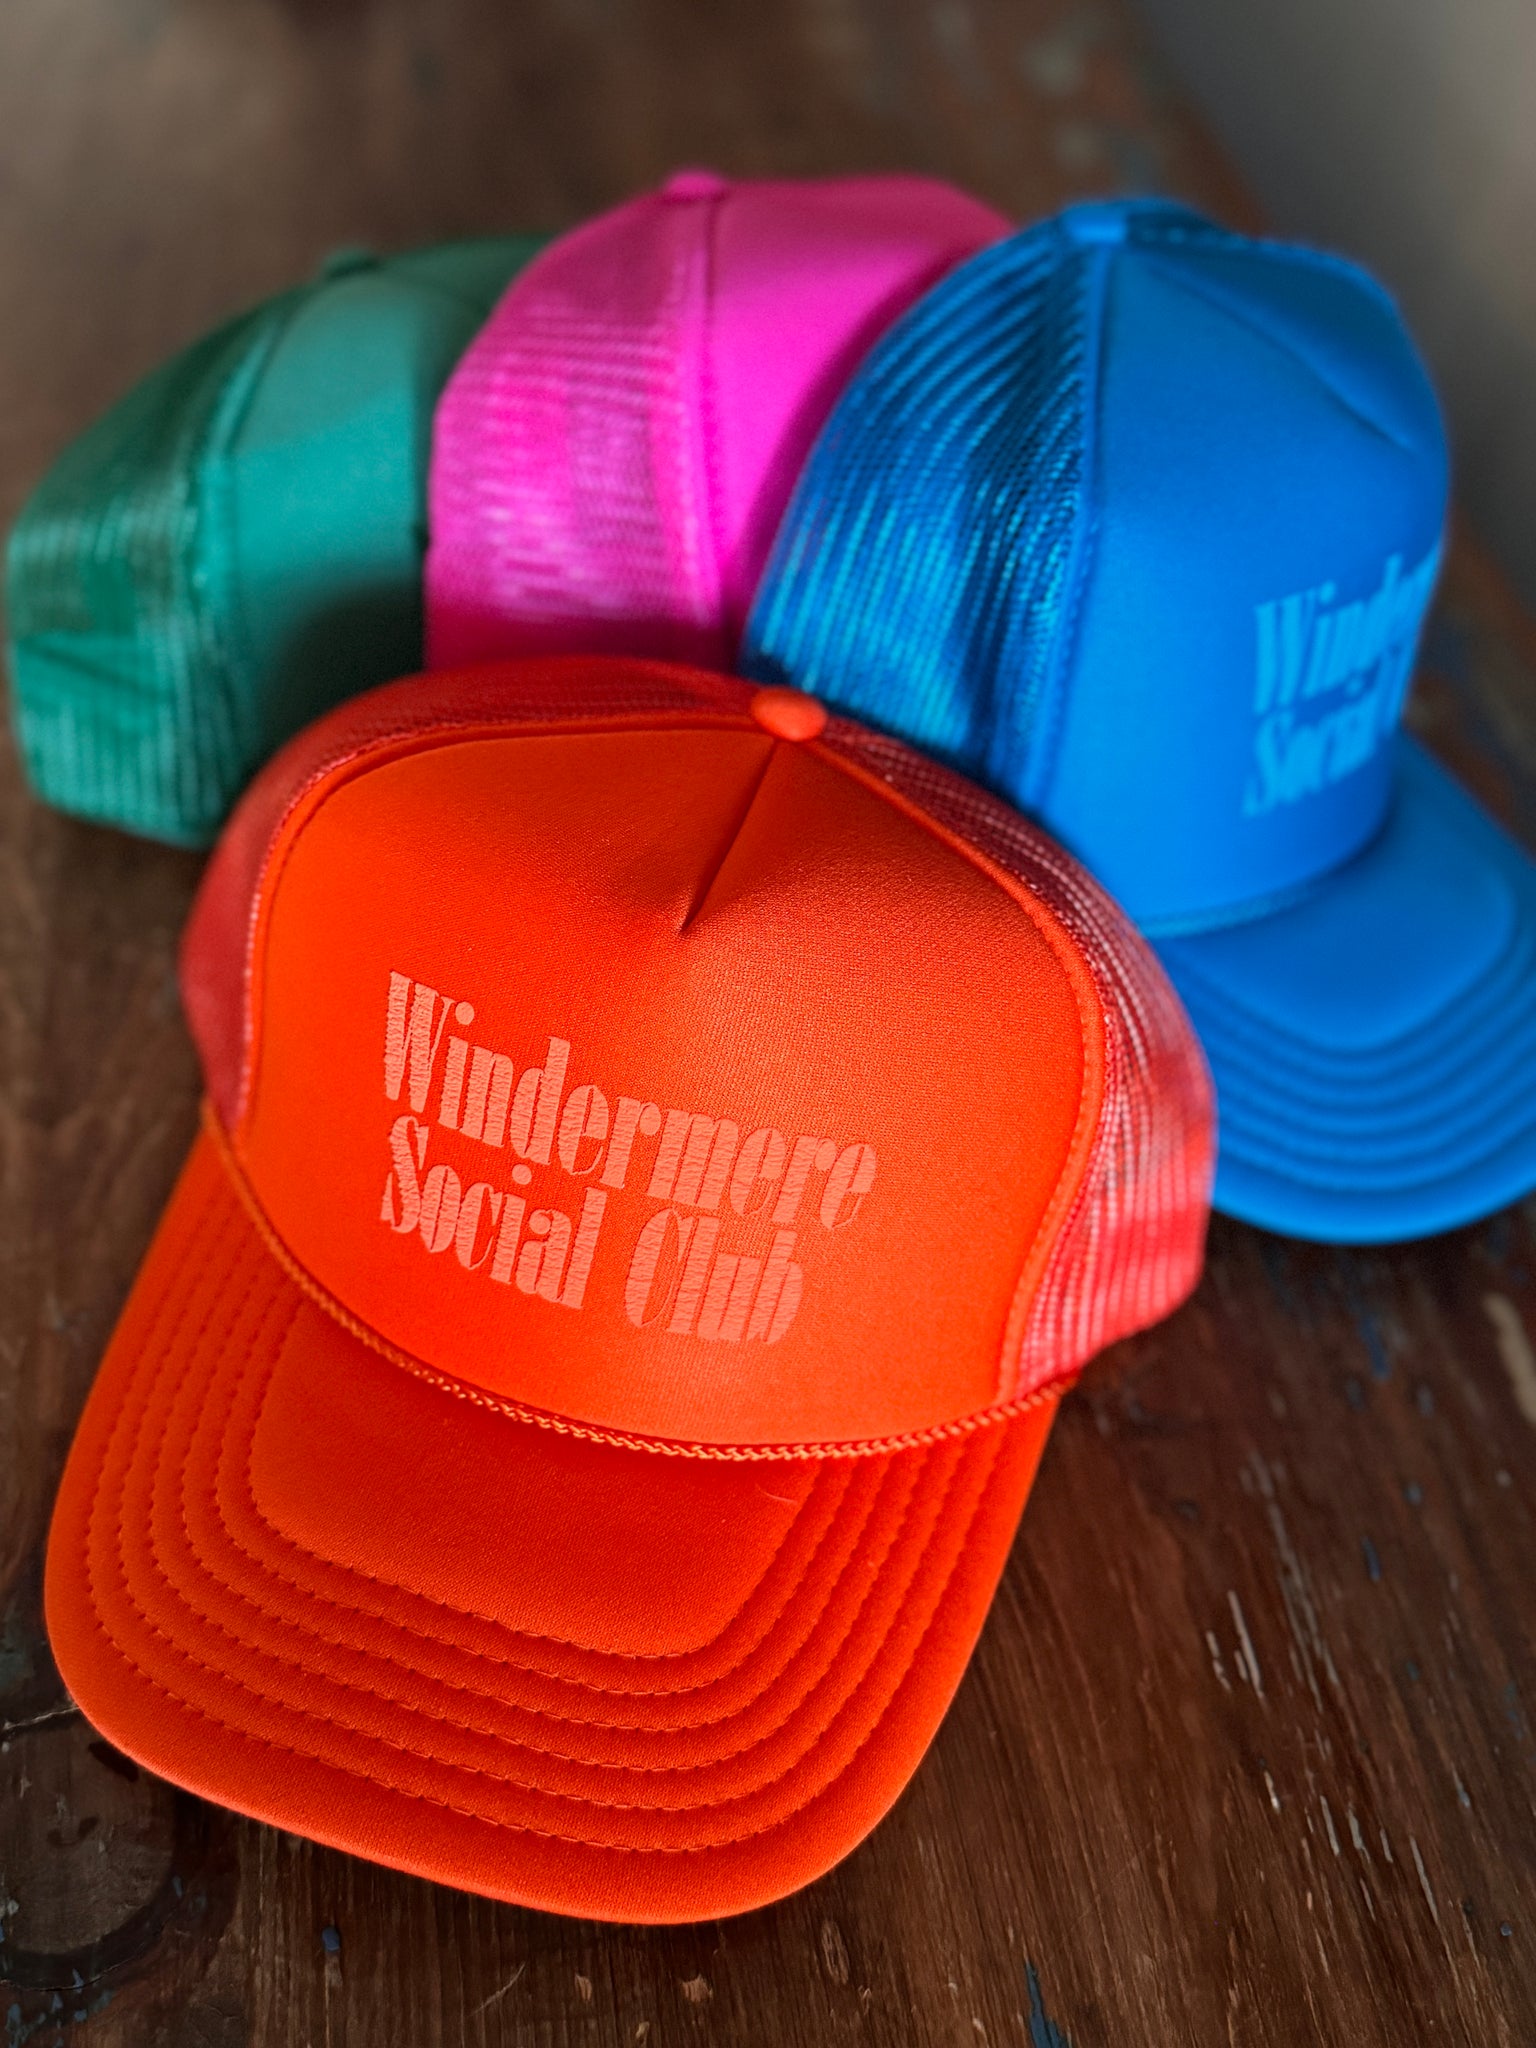 Windermere Social Club trucker hat